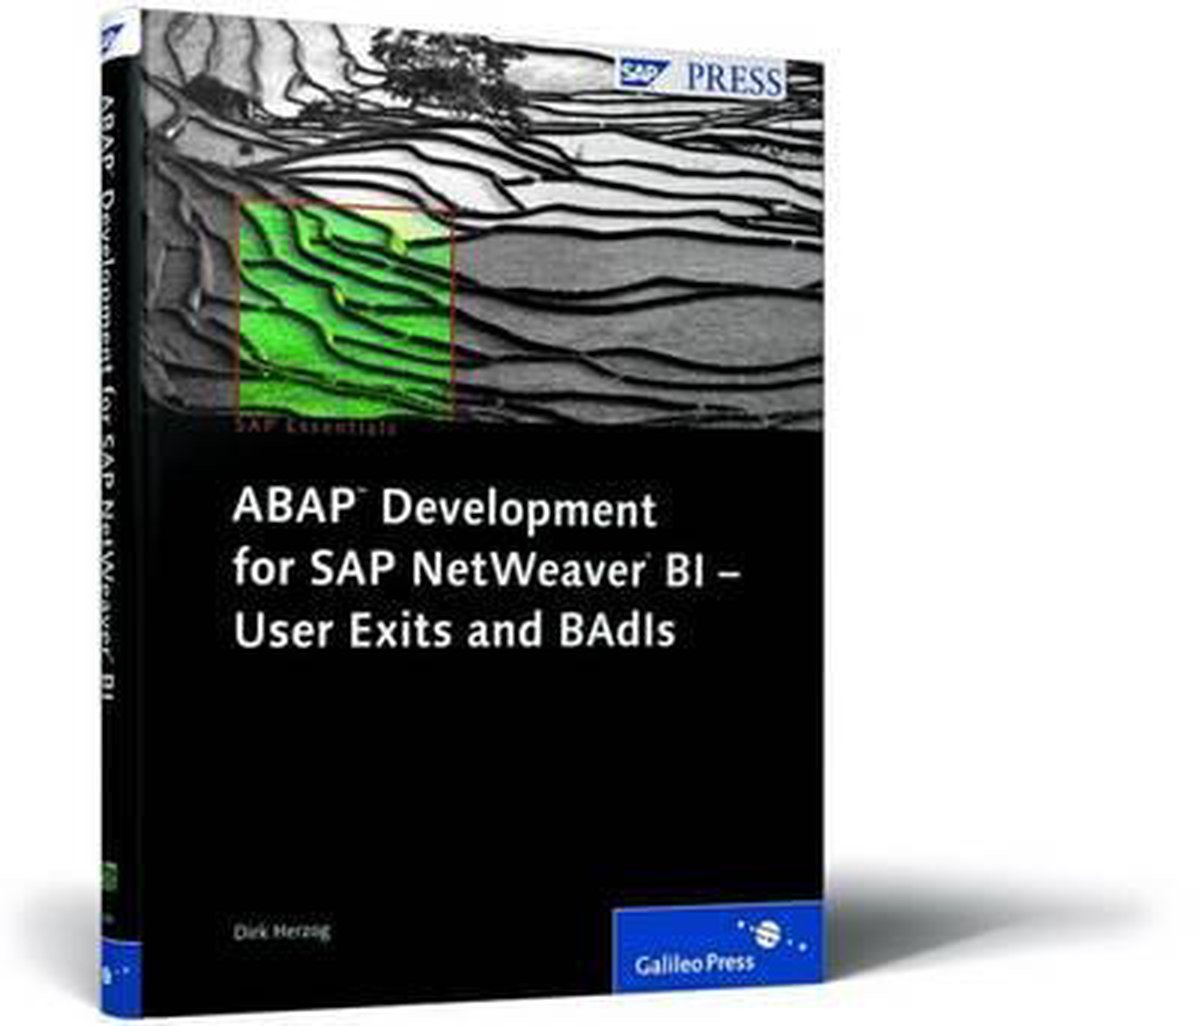 ABAP Development for SAP NetWeaver BI: User Exits and BAdIs